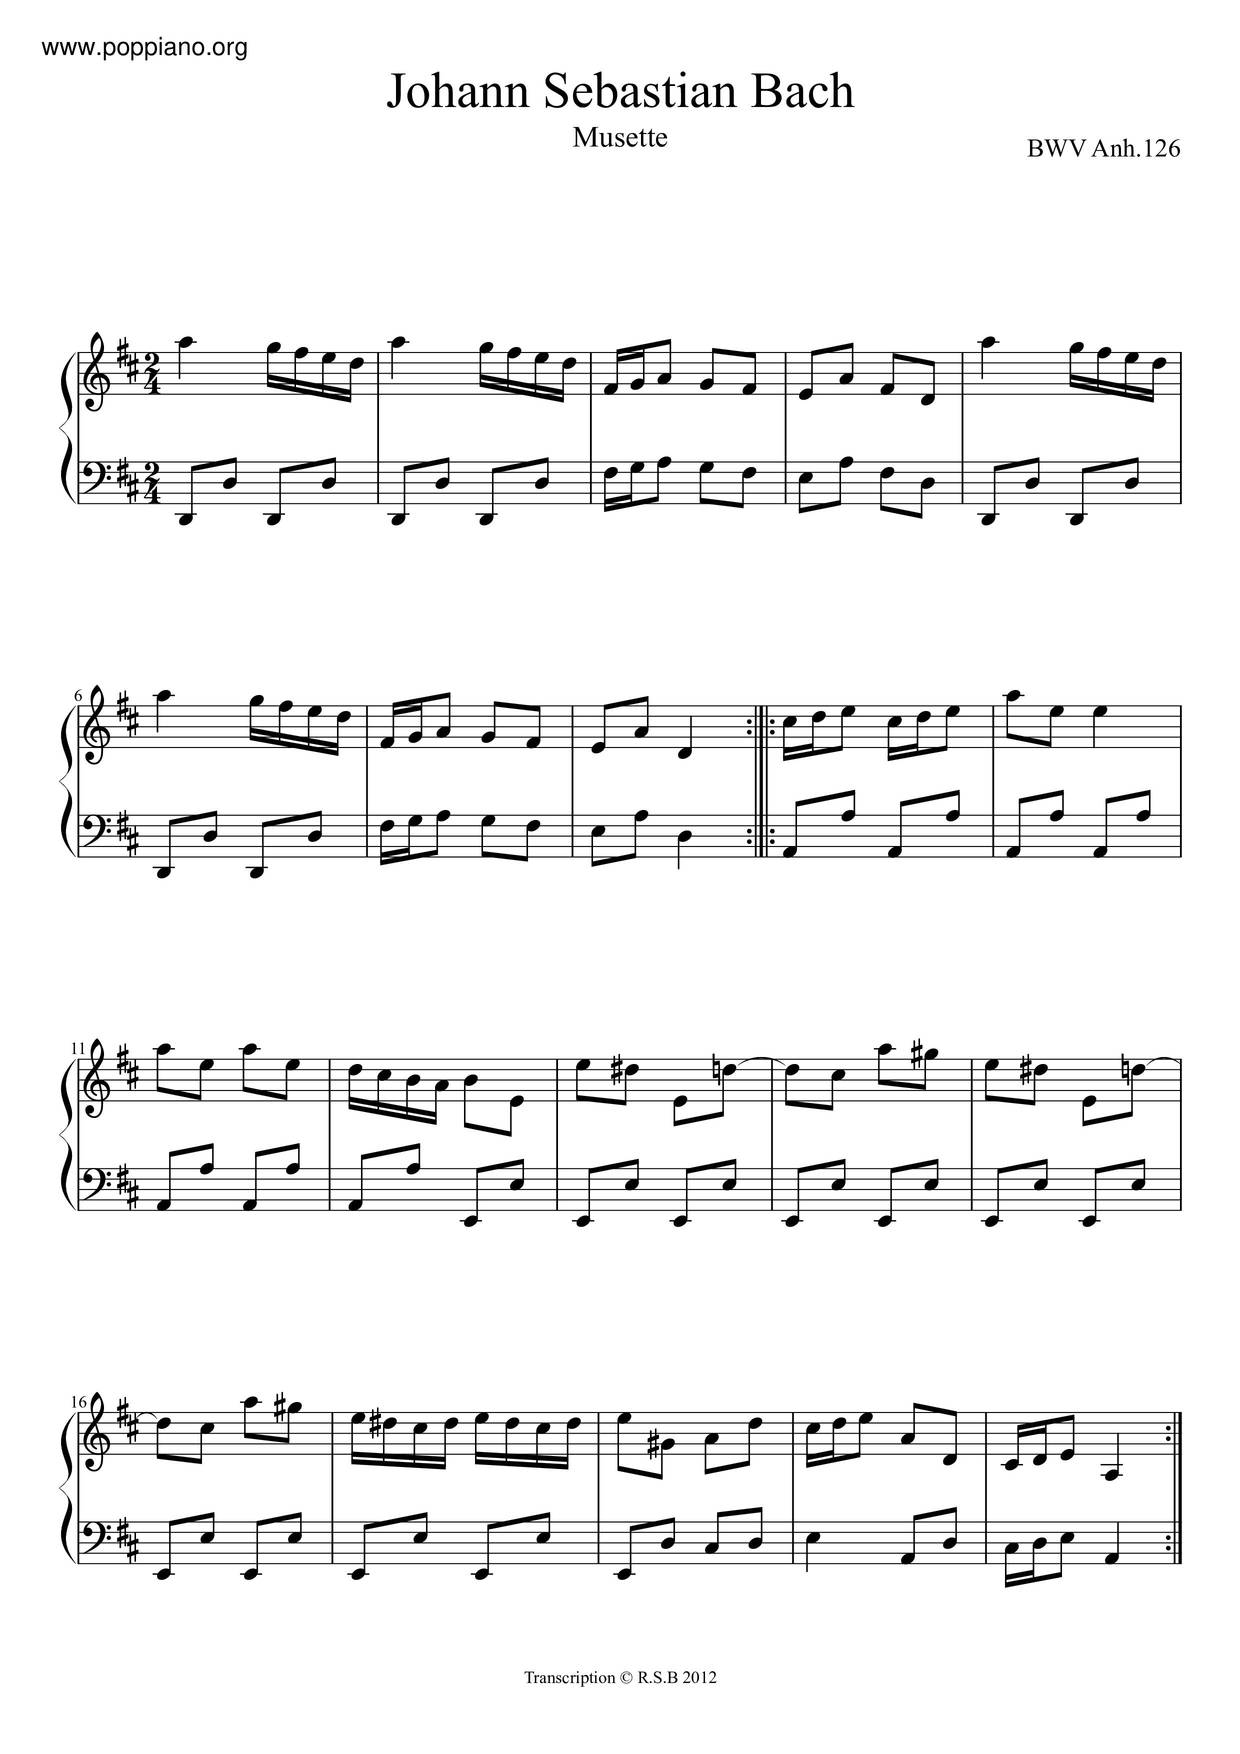 Musette In D Major, BWV Anh. 126ピアノ譜